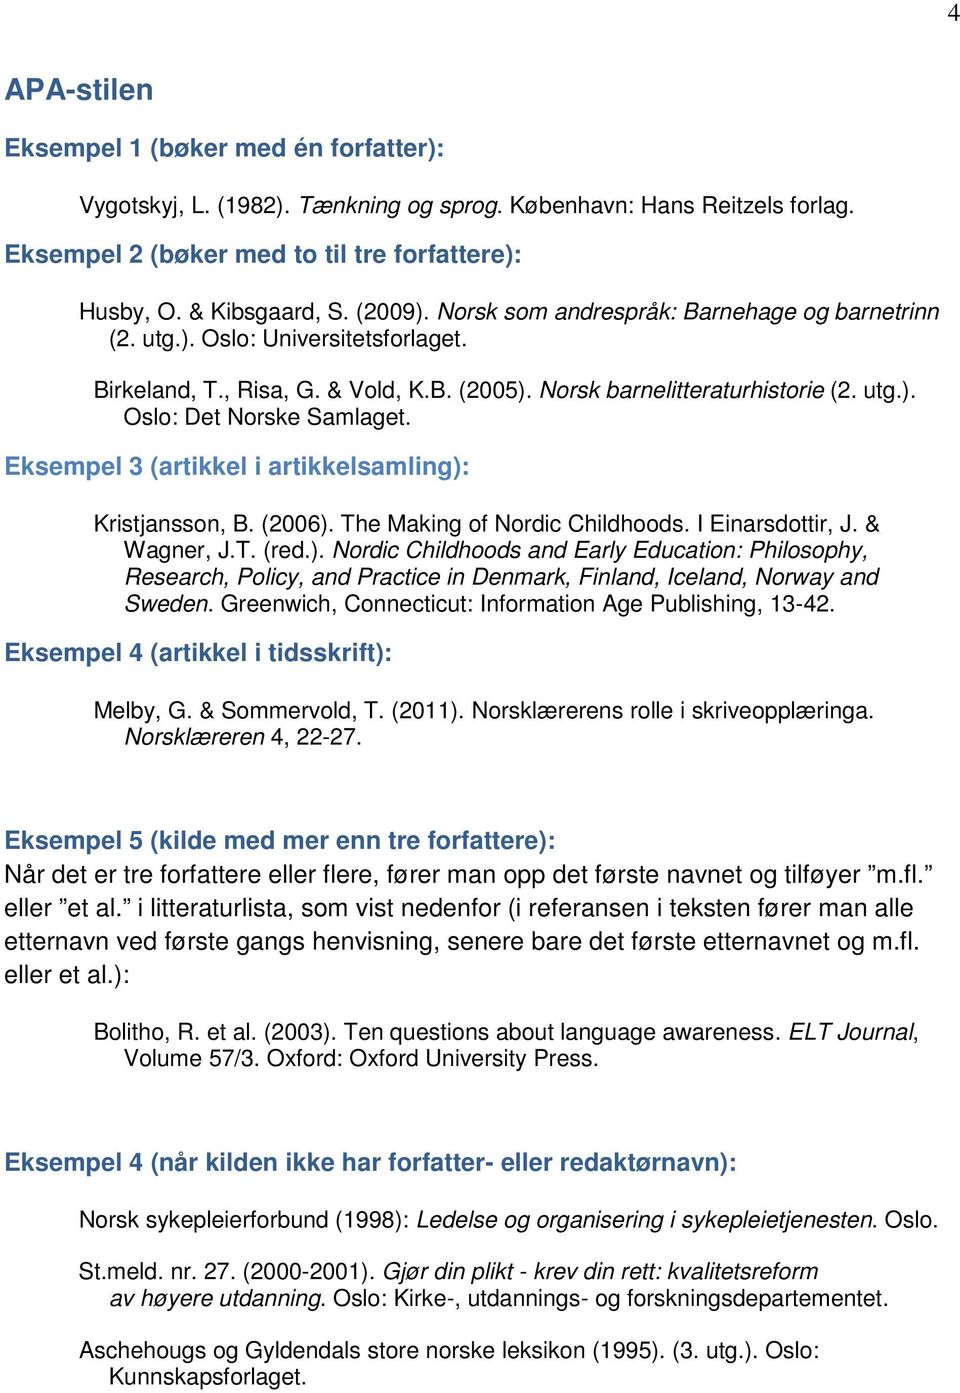 Eksempel 3 (artikkel i artikkelsamling): Kristjansson, B. (2006). The Making of Nordic Childhoods. I Einarsdottir, J. & Wagner, J.T. (red.). Nordic Childhoods and Early Education: Philosophy, Research, Policy, and Practice in Denmark, Finland, Iceland, Norway and Sweden.